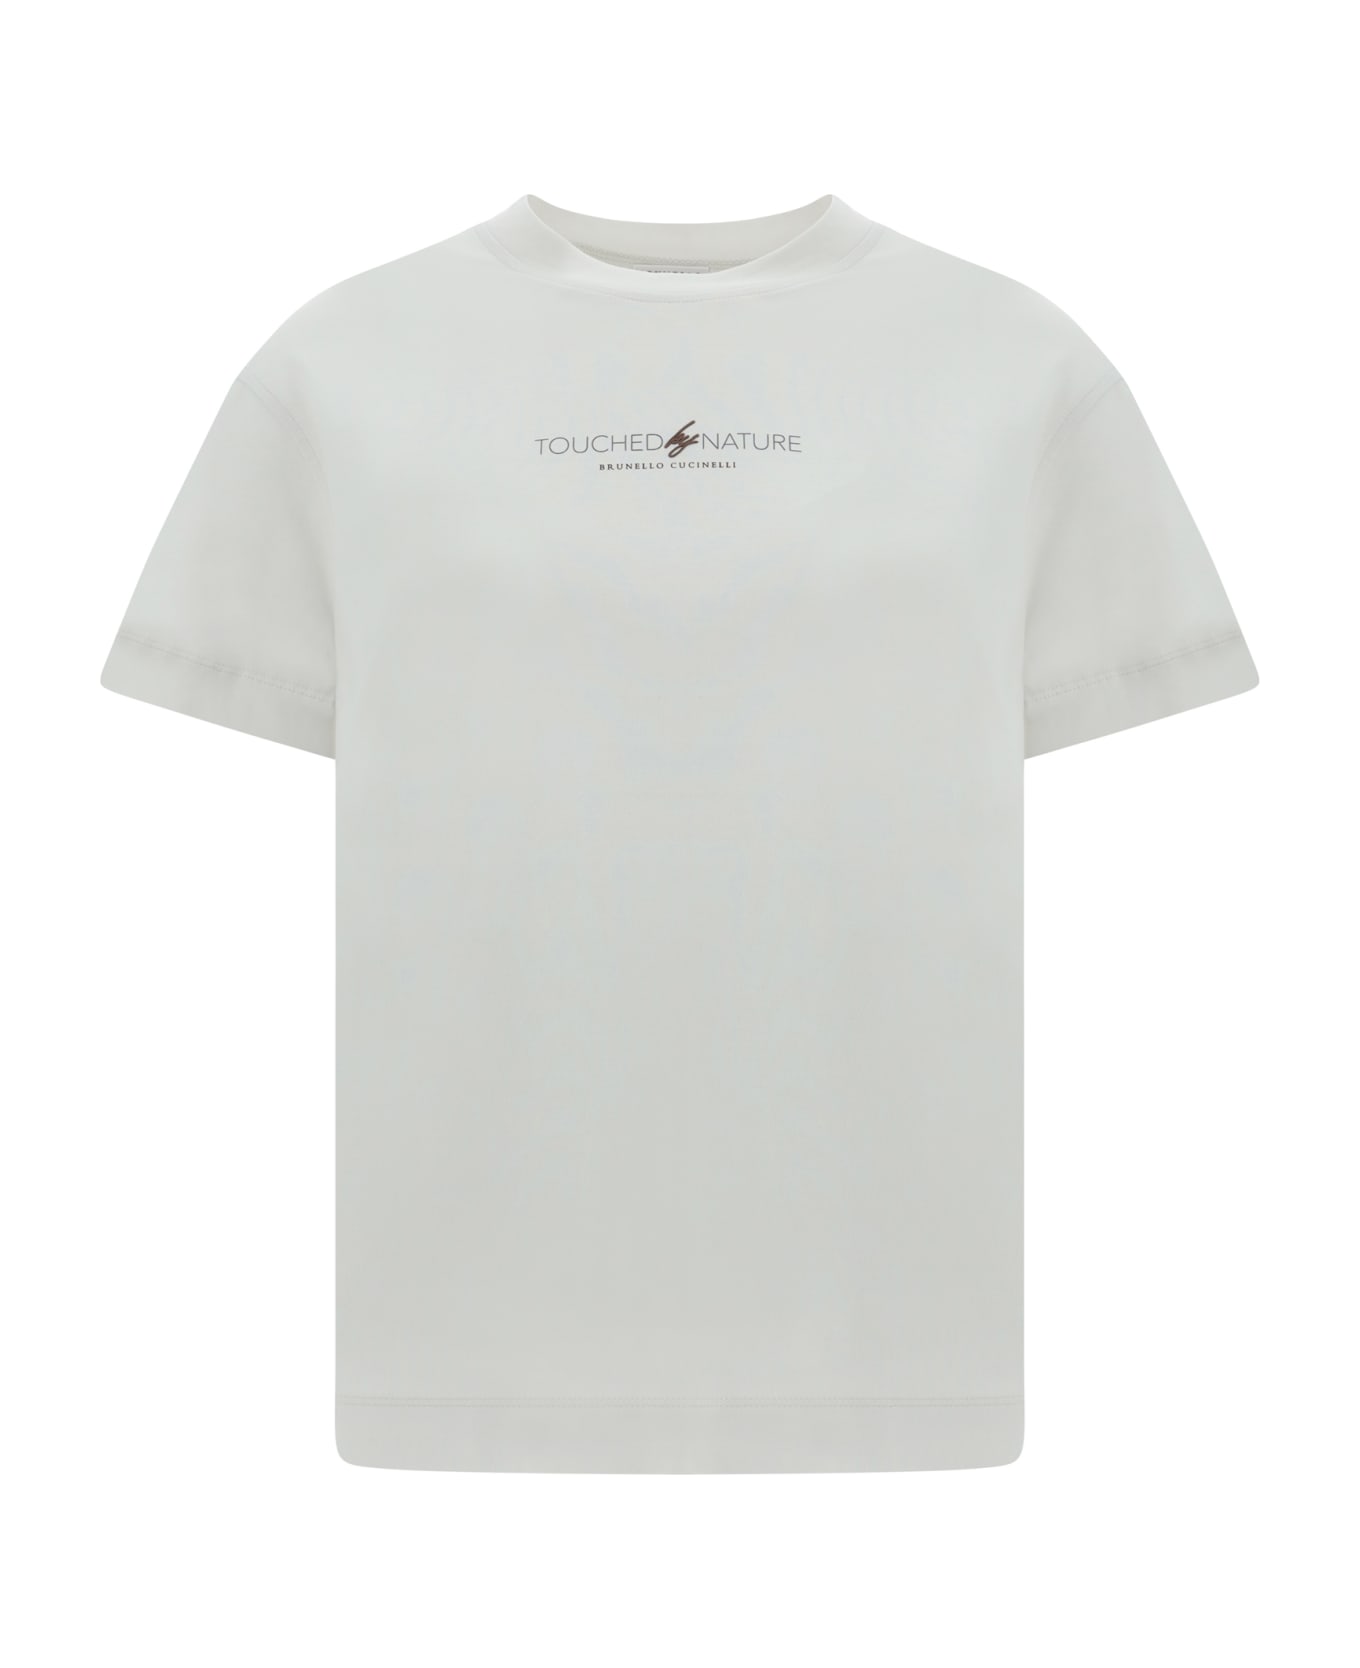 Brunello Cucinelli Touched Nature Logo T-shirt - Warm White Tシャツ